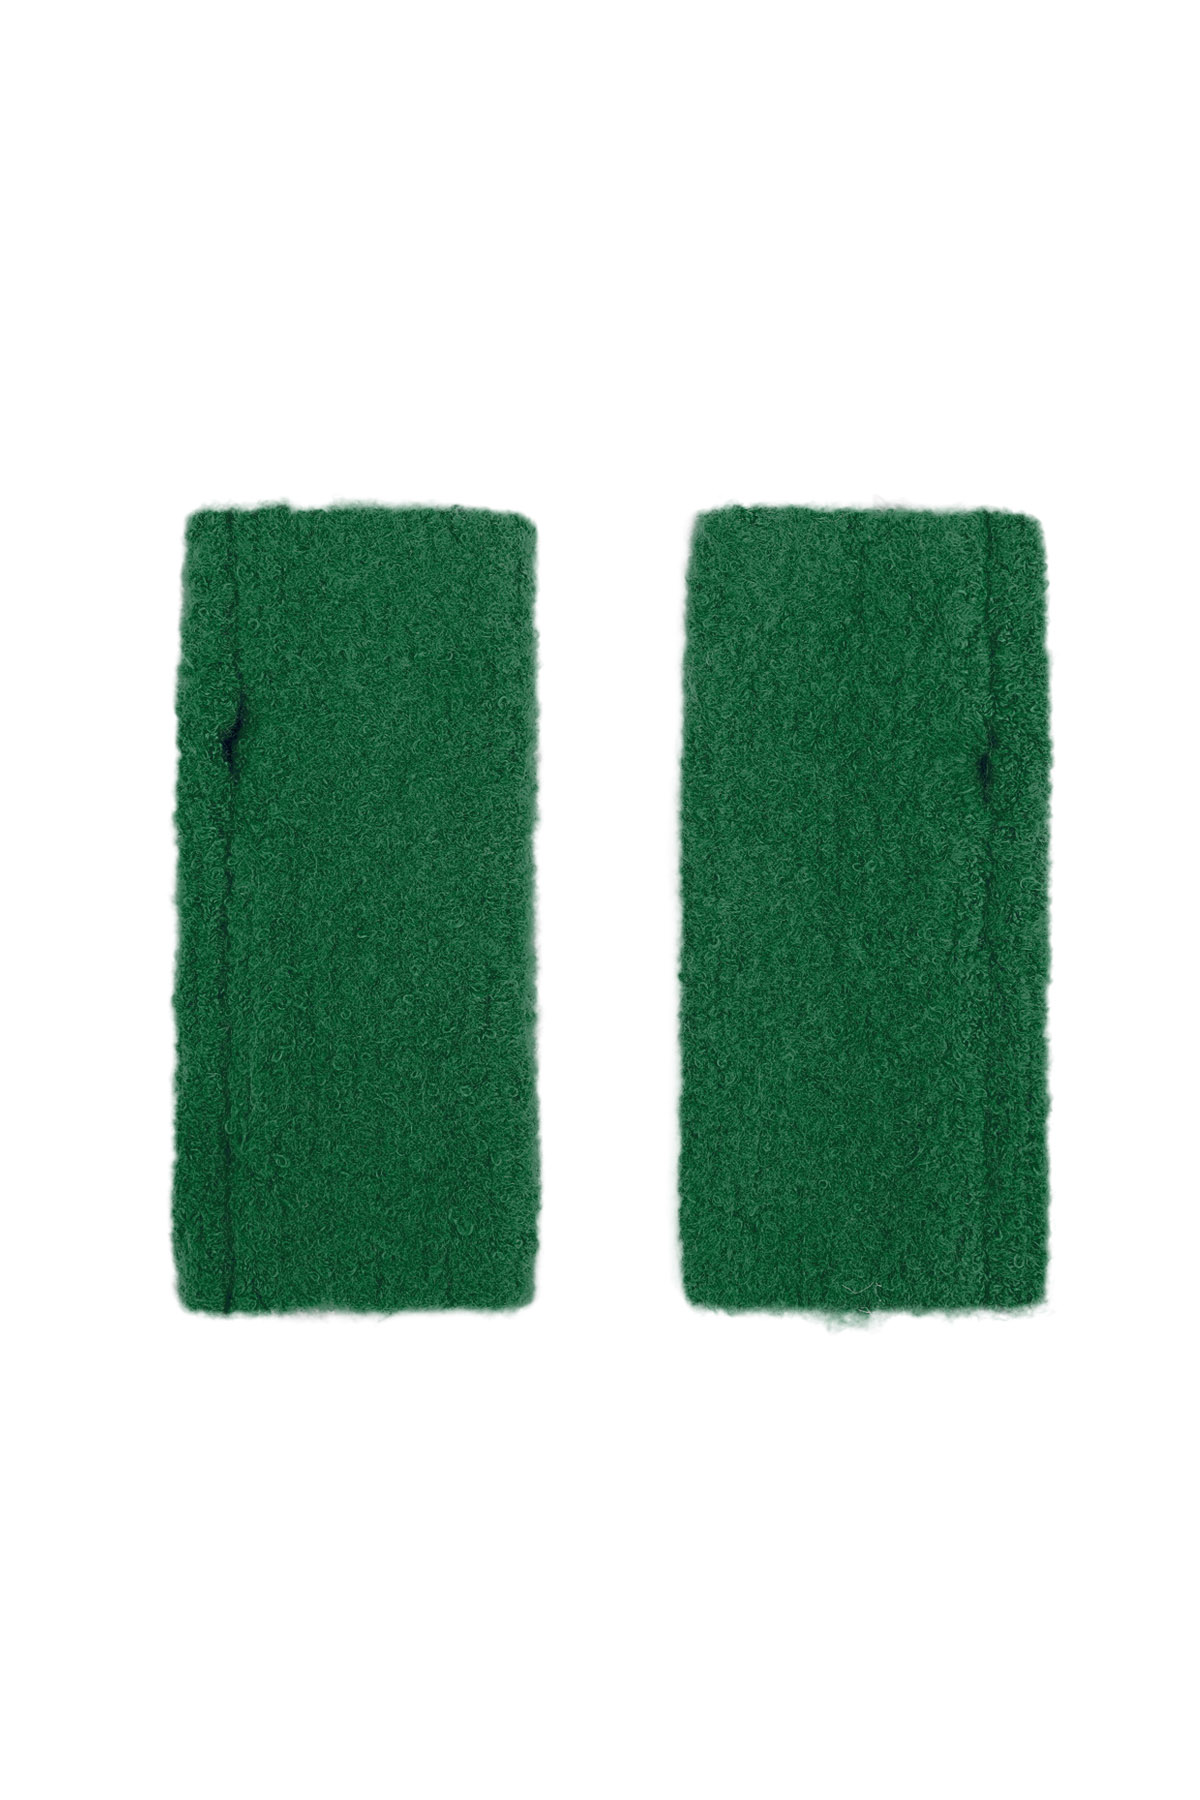 Gloves with hole - dark green h5 